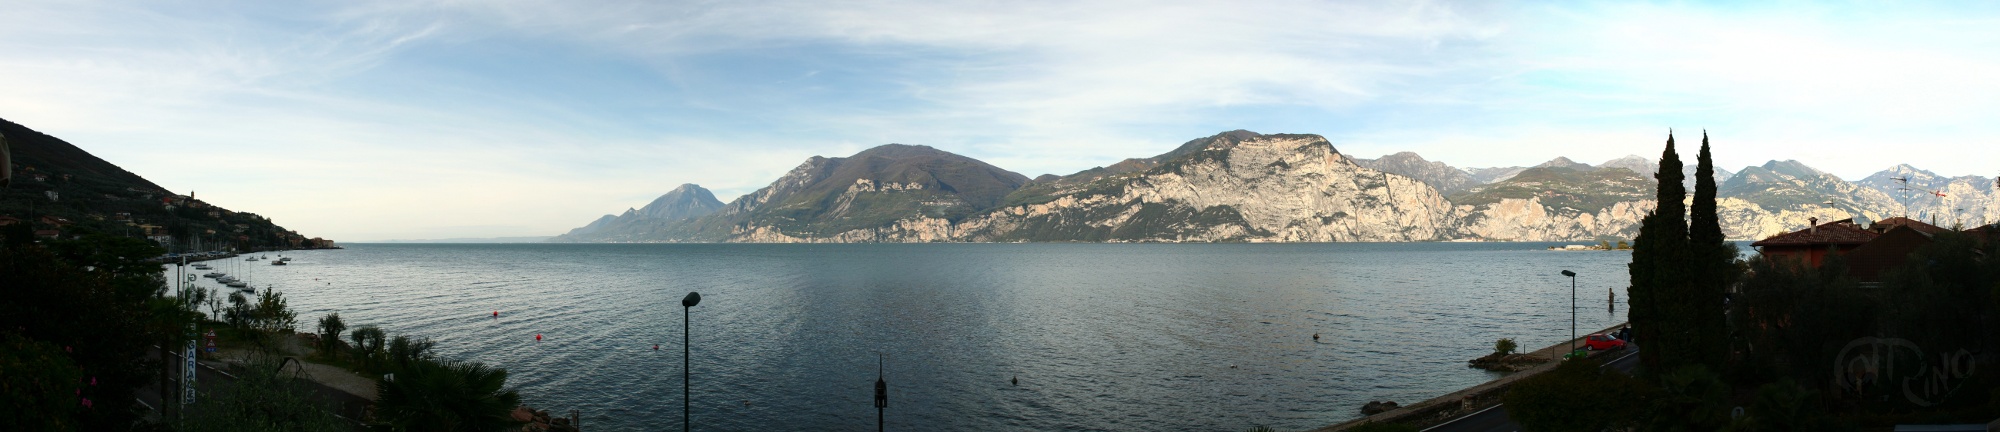 Brenzone - Lago di Garda